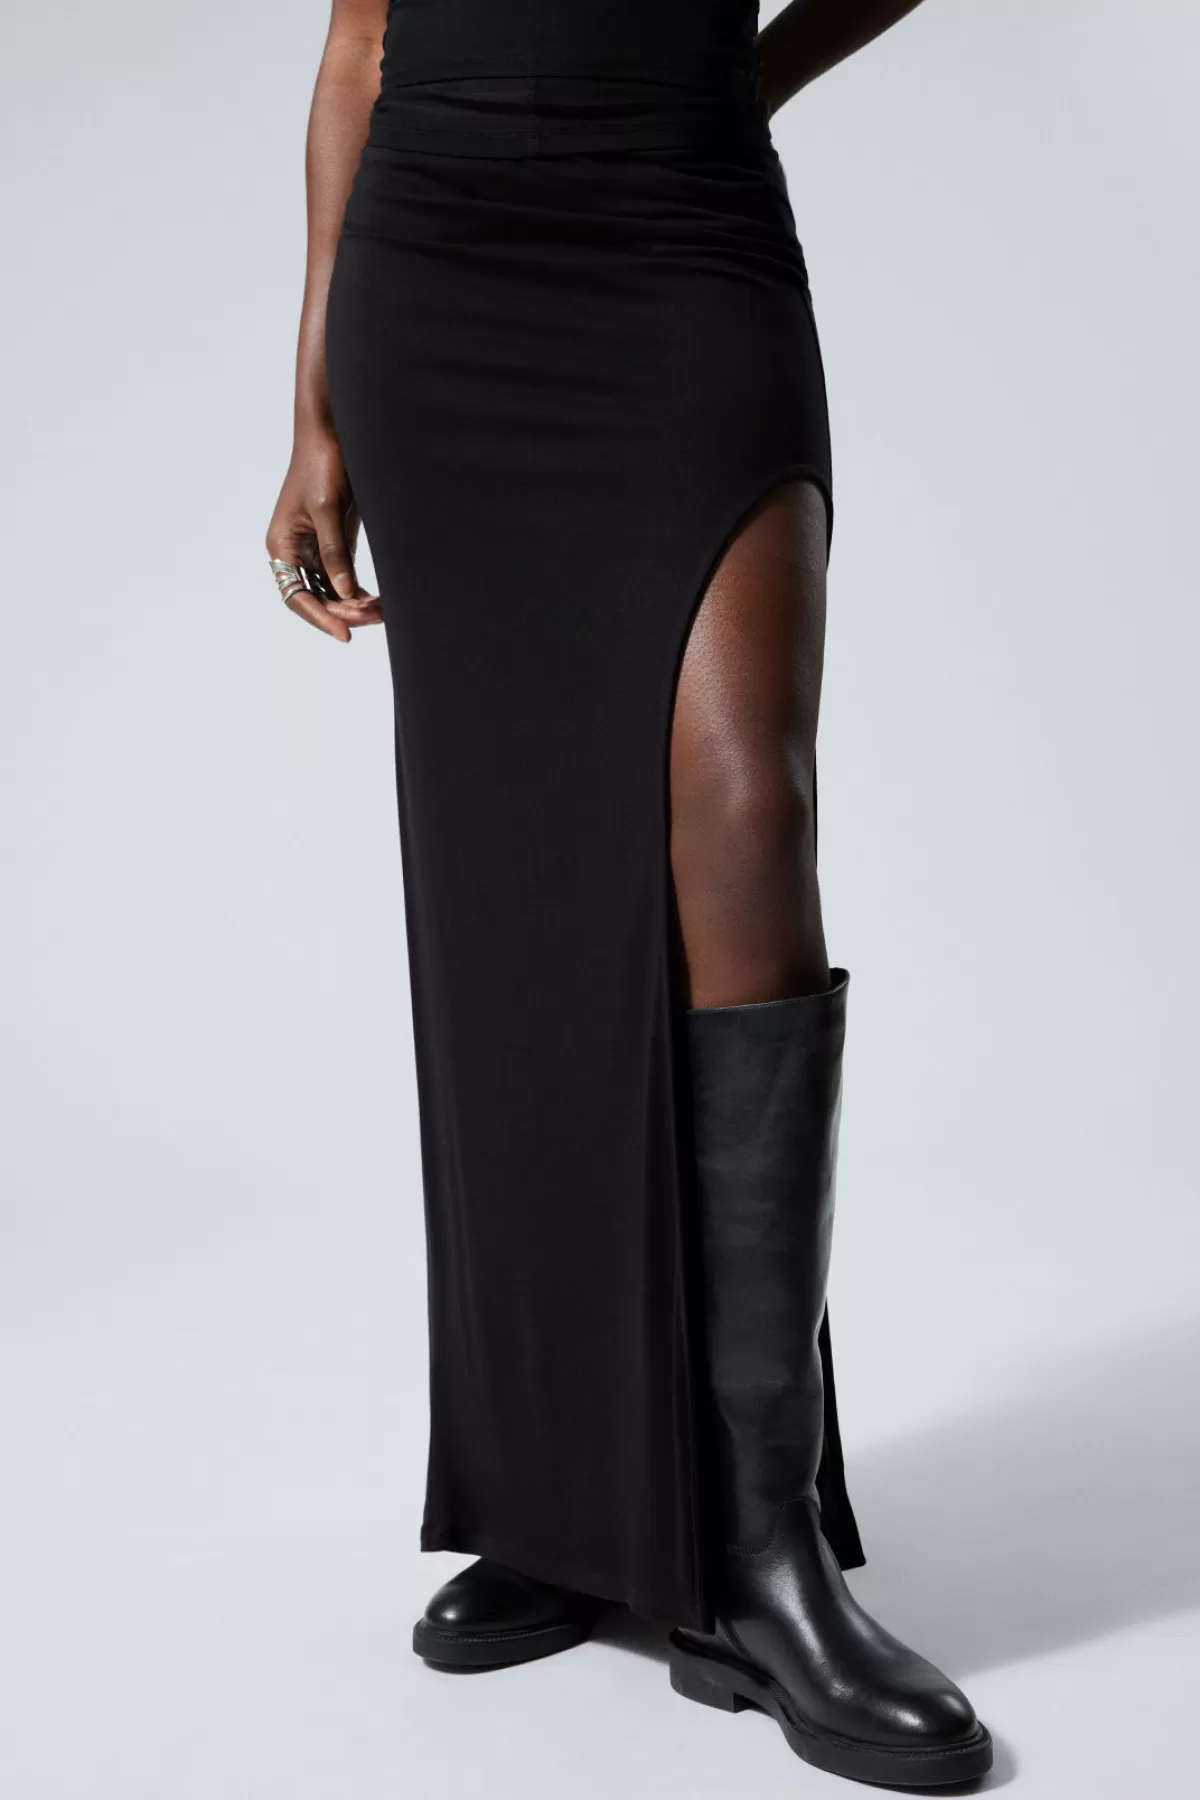 Weekday Joan Slit Skirt Black Online